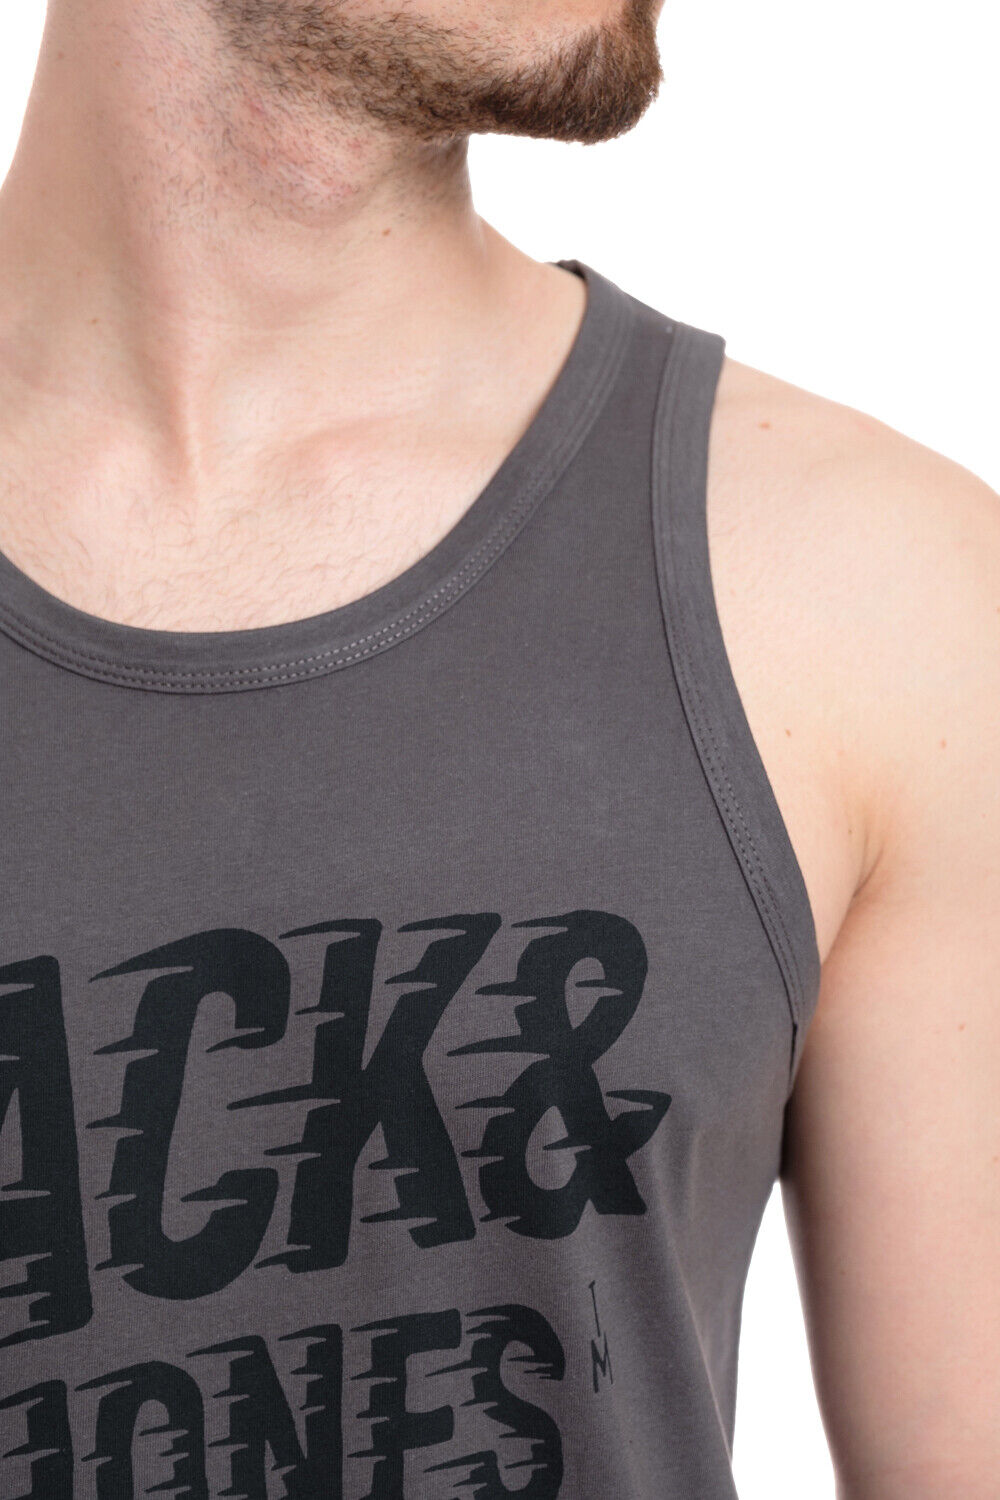 Jack Jones Herren Tank Top Basic Shirt Rundhals Regular Fit Muskel Shirts Neu 